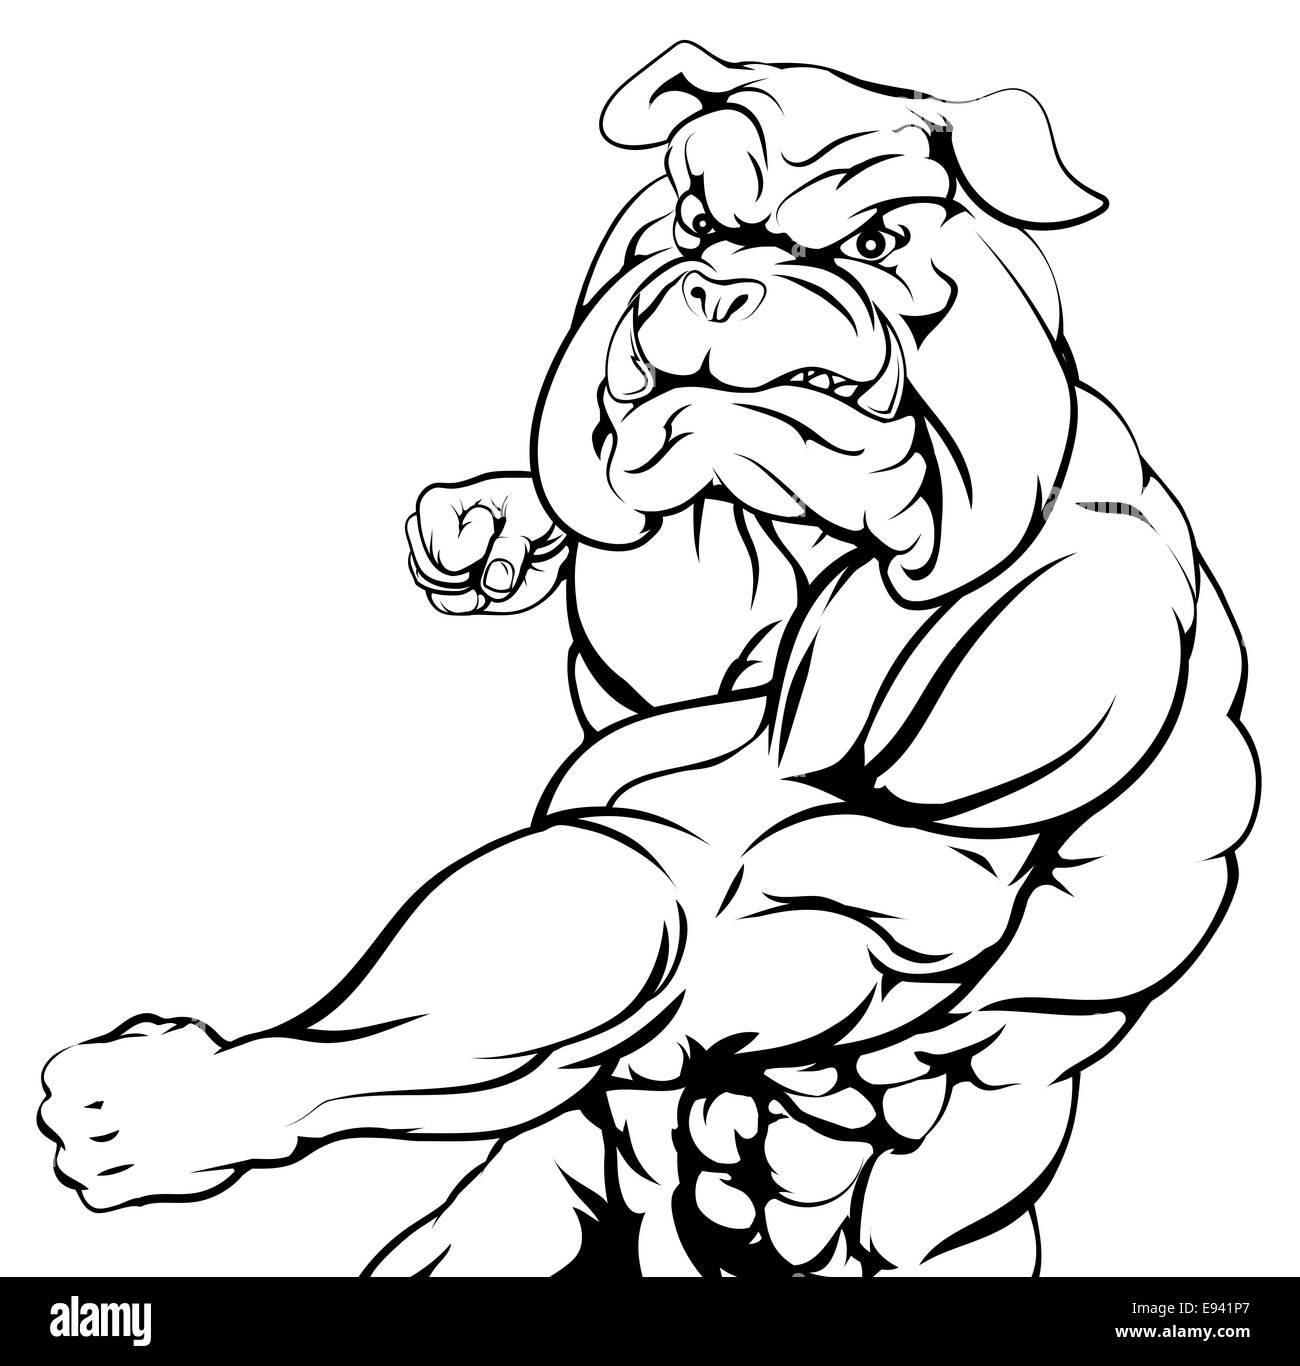 Bulldog Ice Hockey Player Animal Sports Mascot Stock Vector Image & Art -  Alamy 